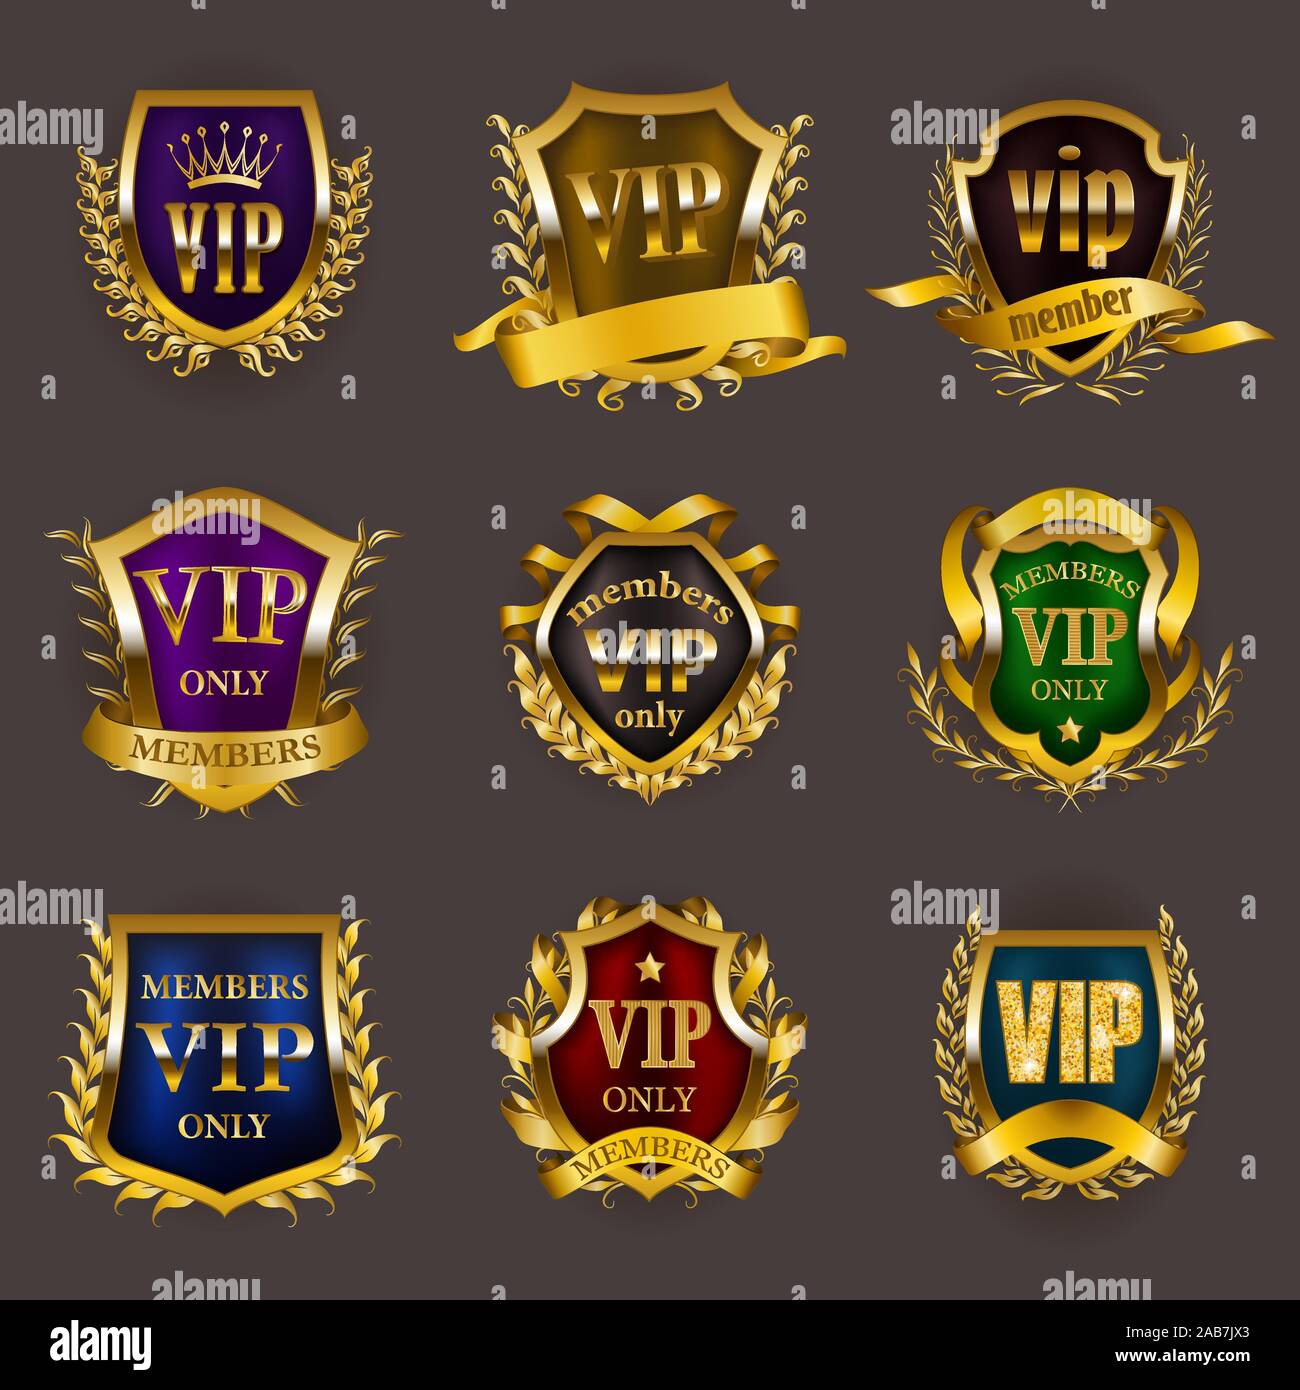 vip logo gold